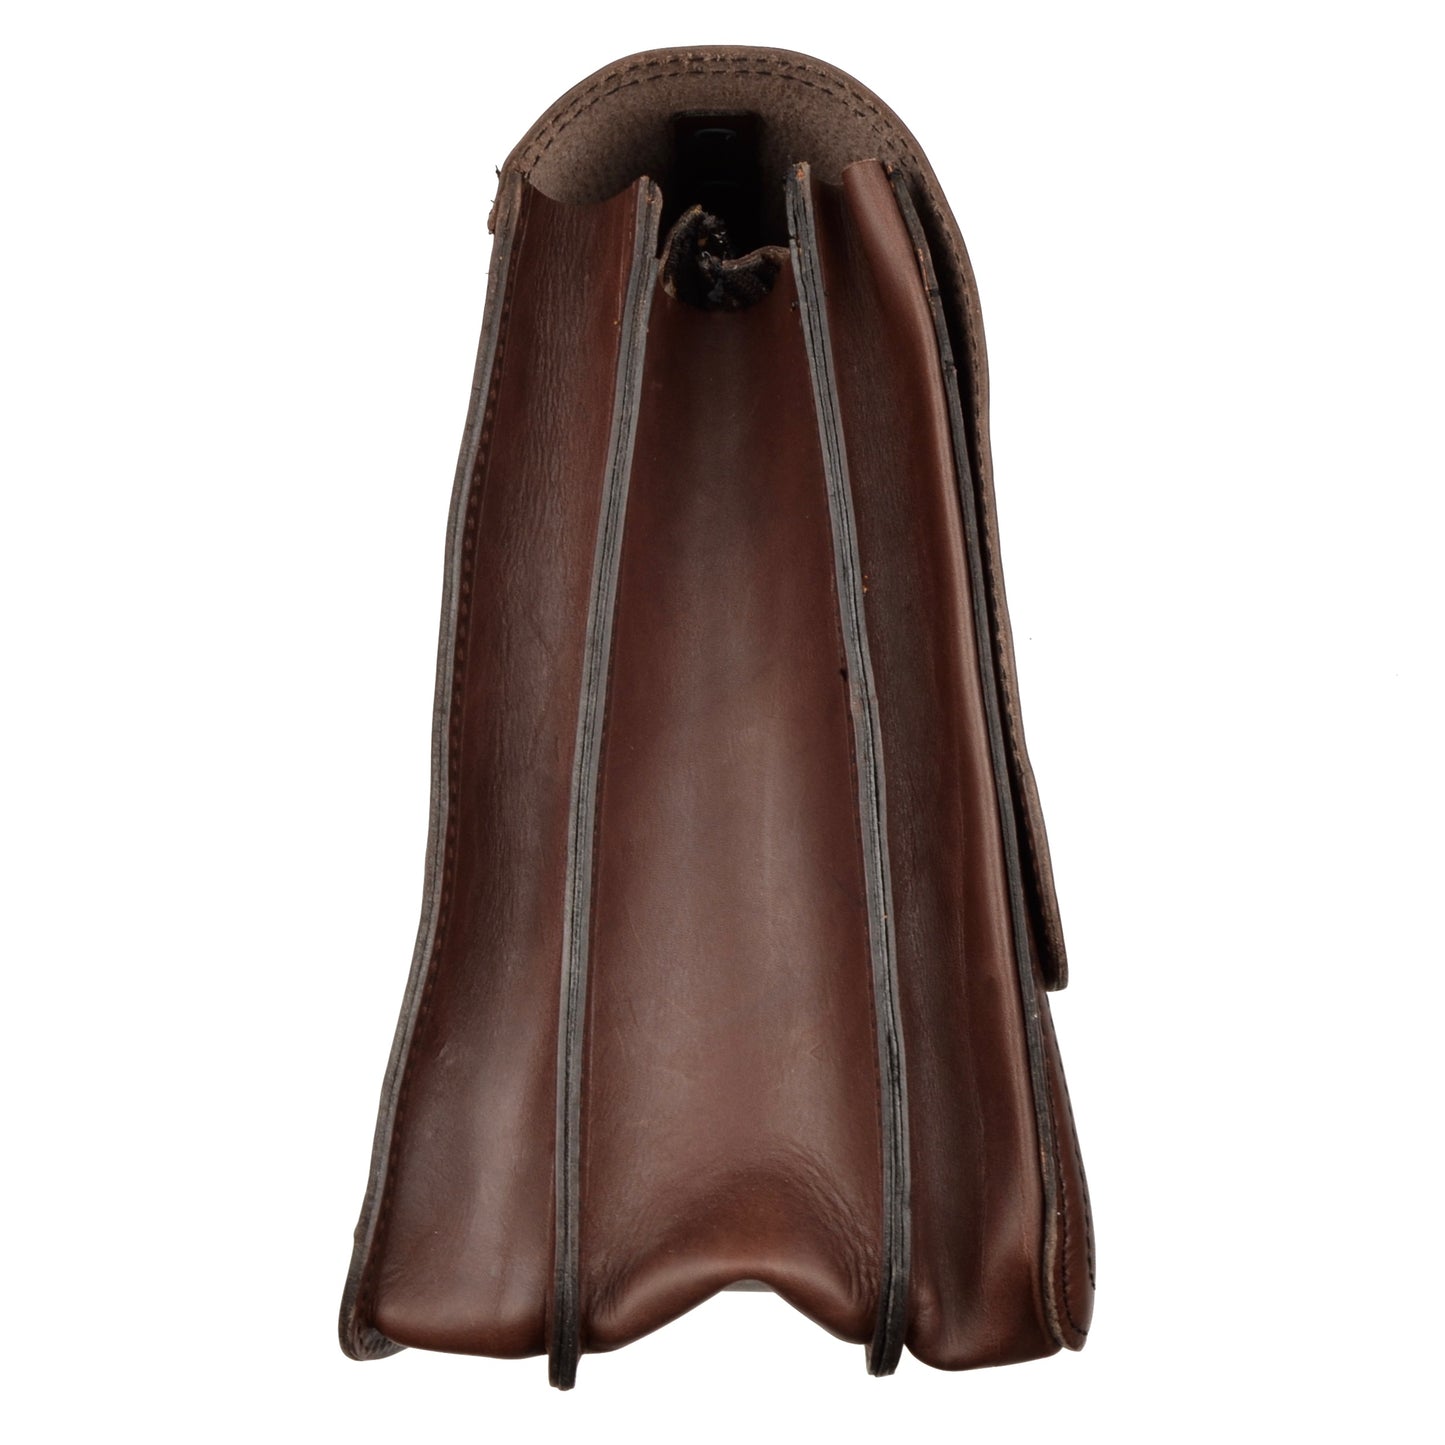 RM Aktentasche/Tasche XL aus geöltem Leder - Umbrabraun